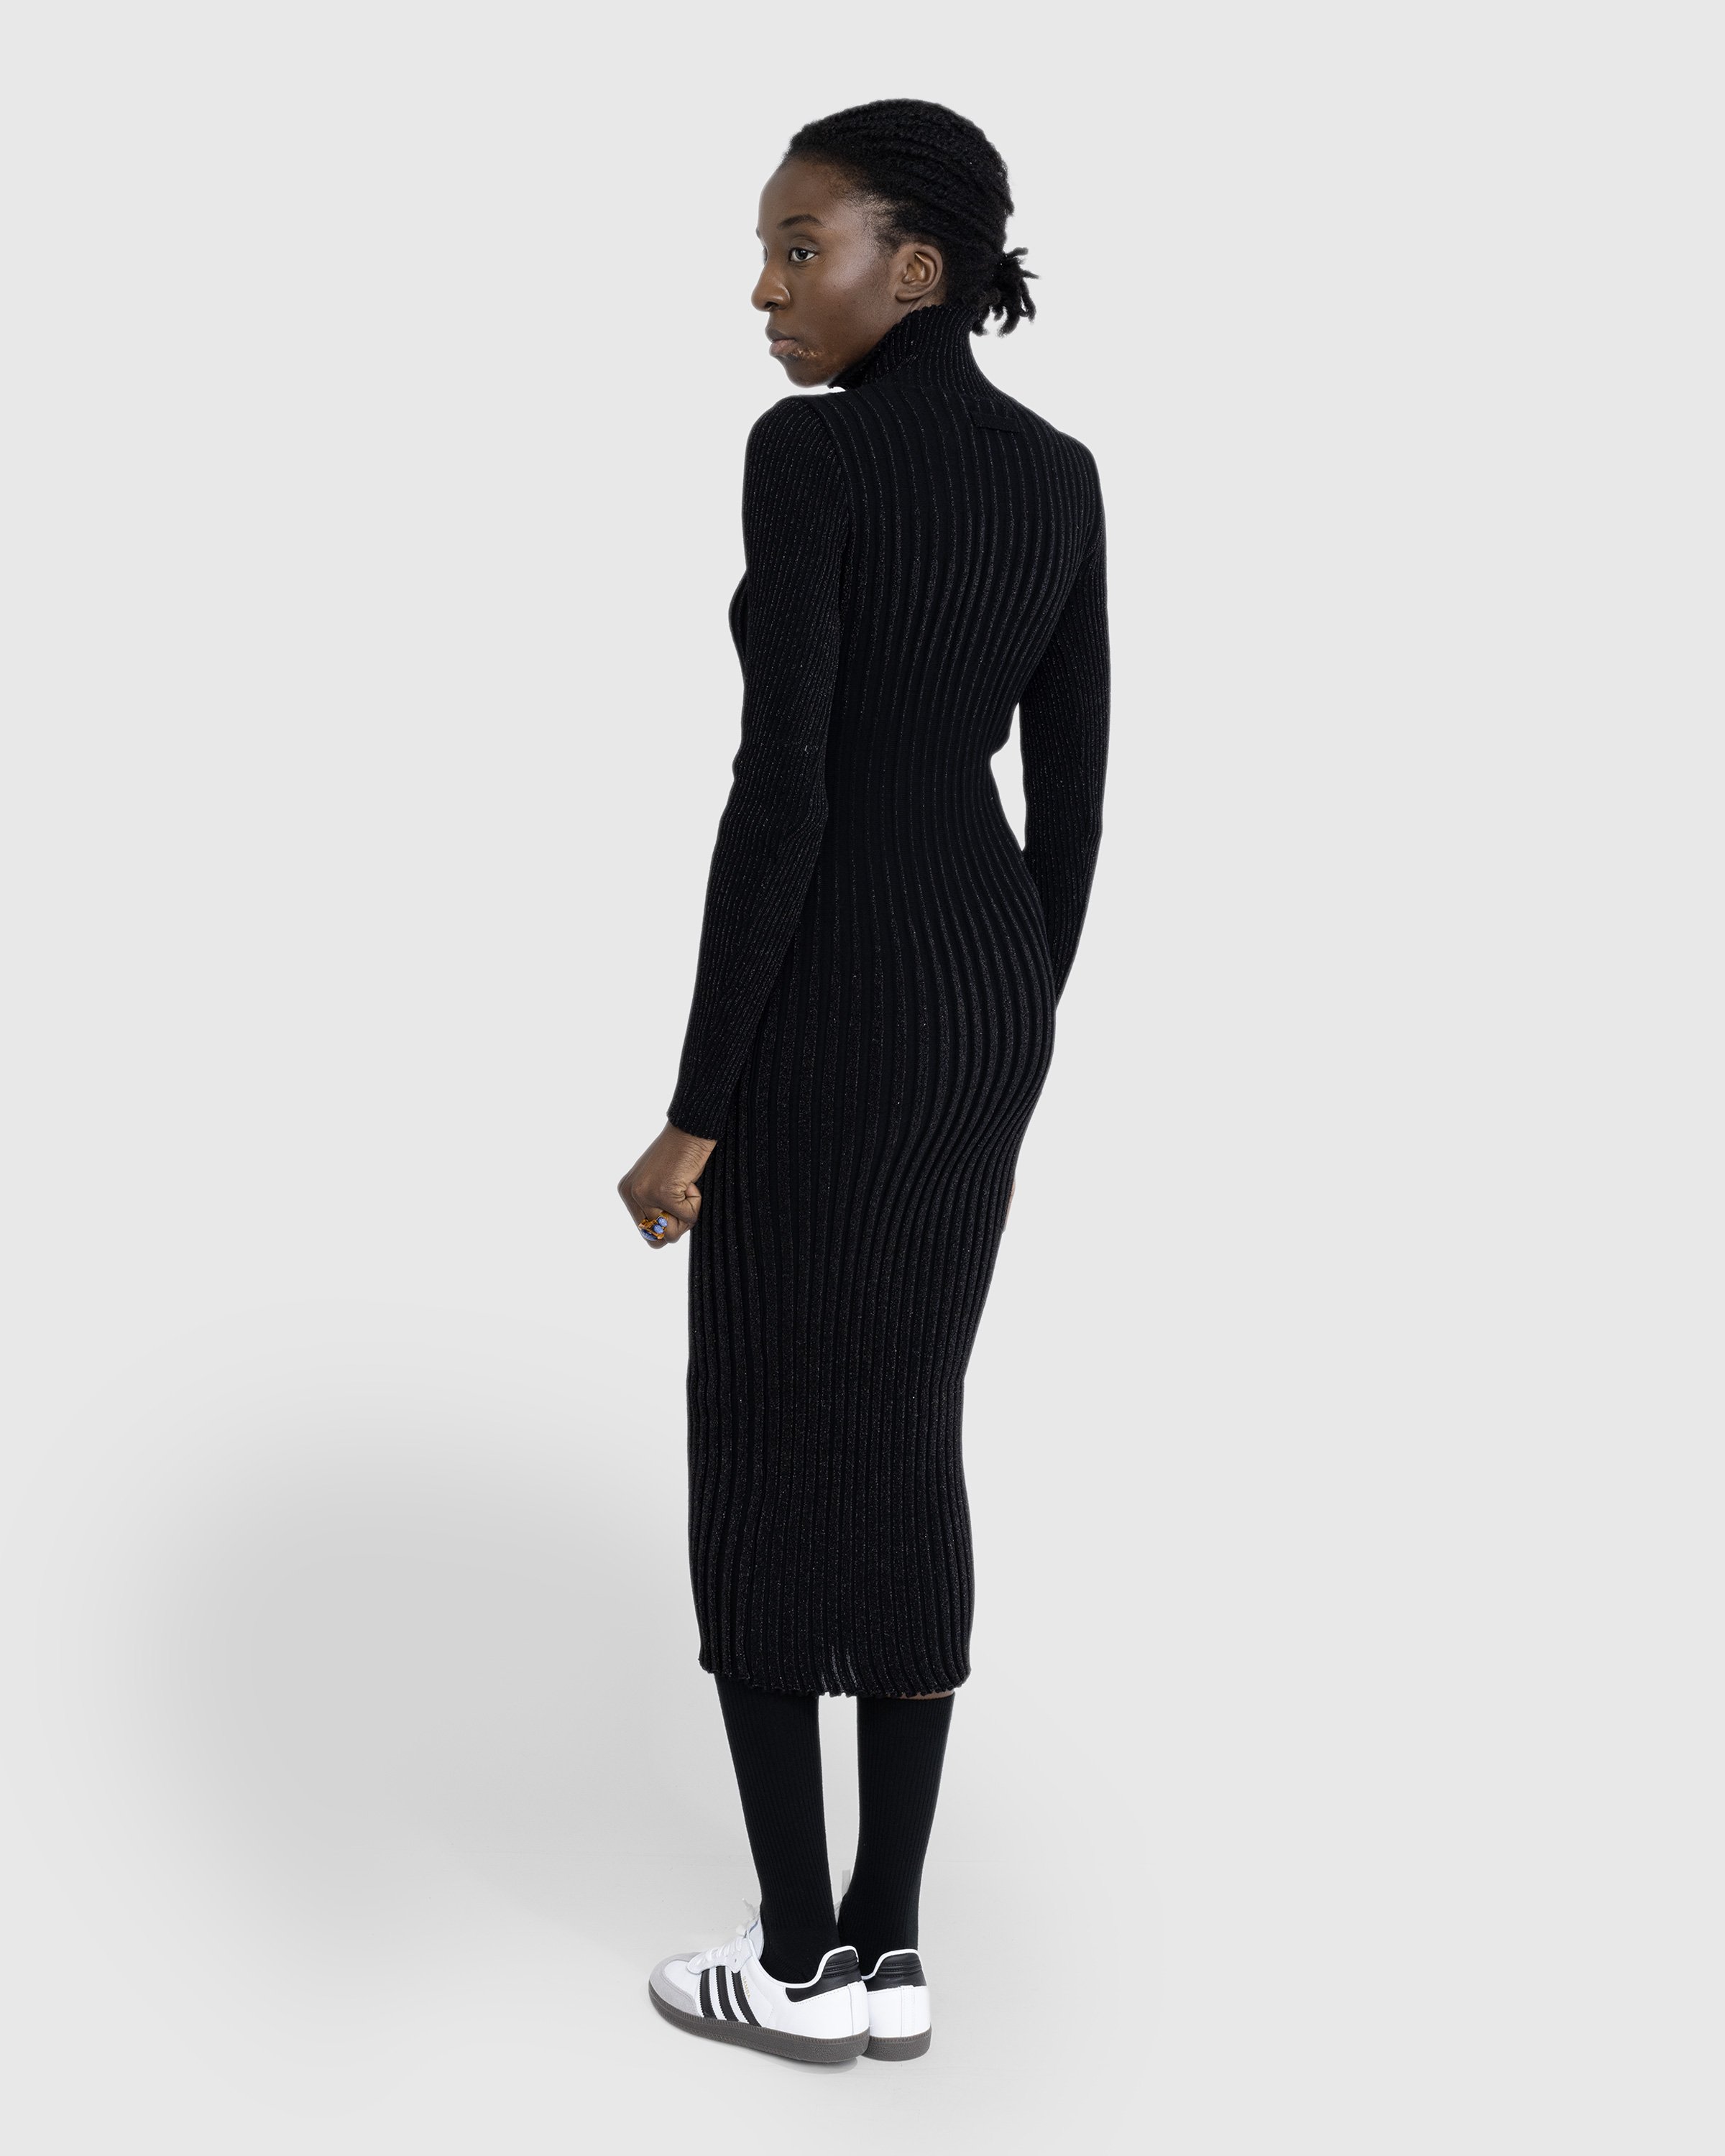 Jean Paul Gaultier - High Neck Long Dress Black - Clothing - Black - Image 3